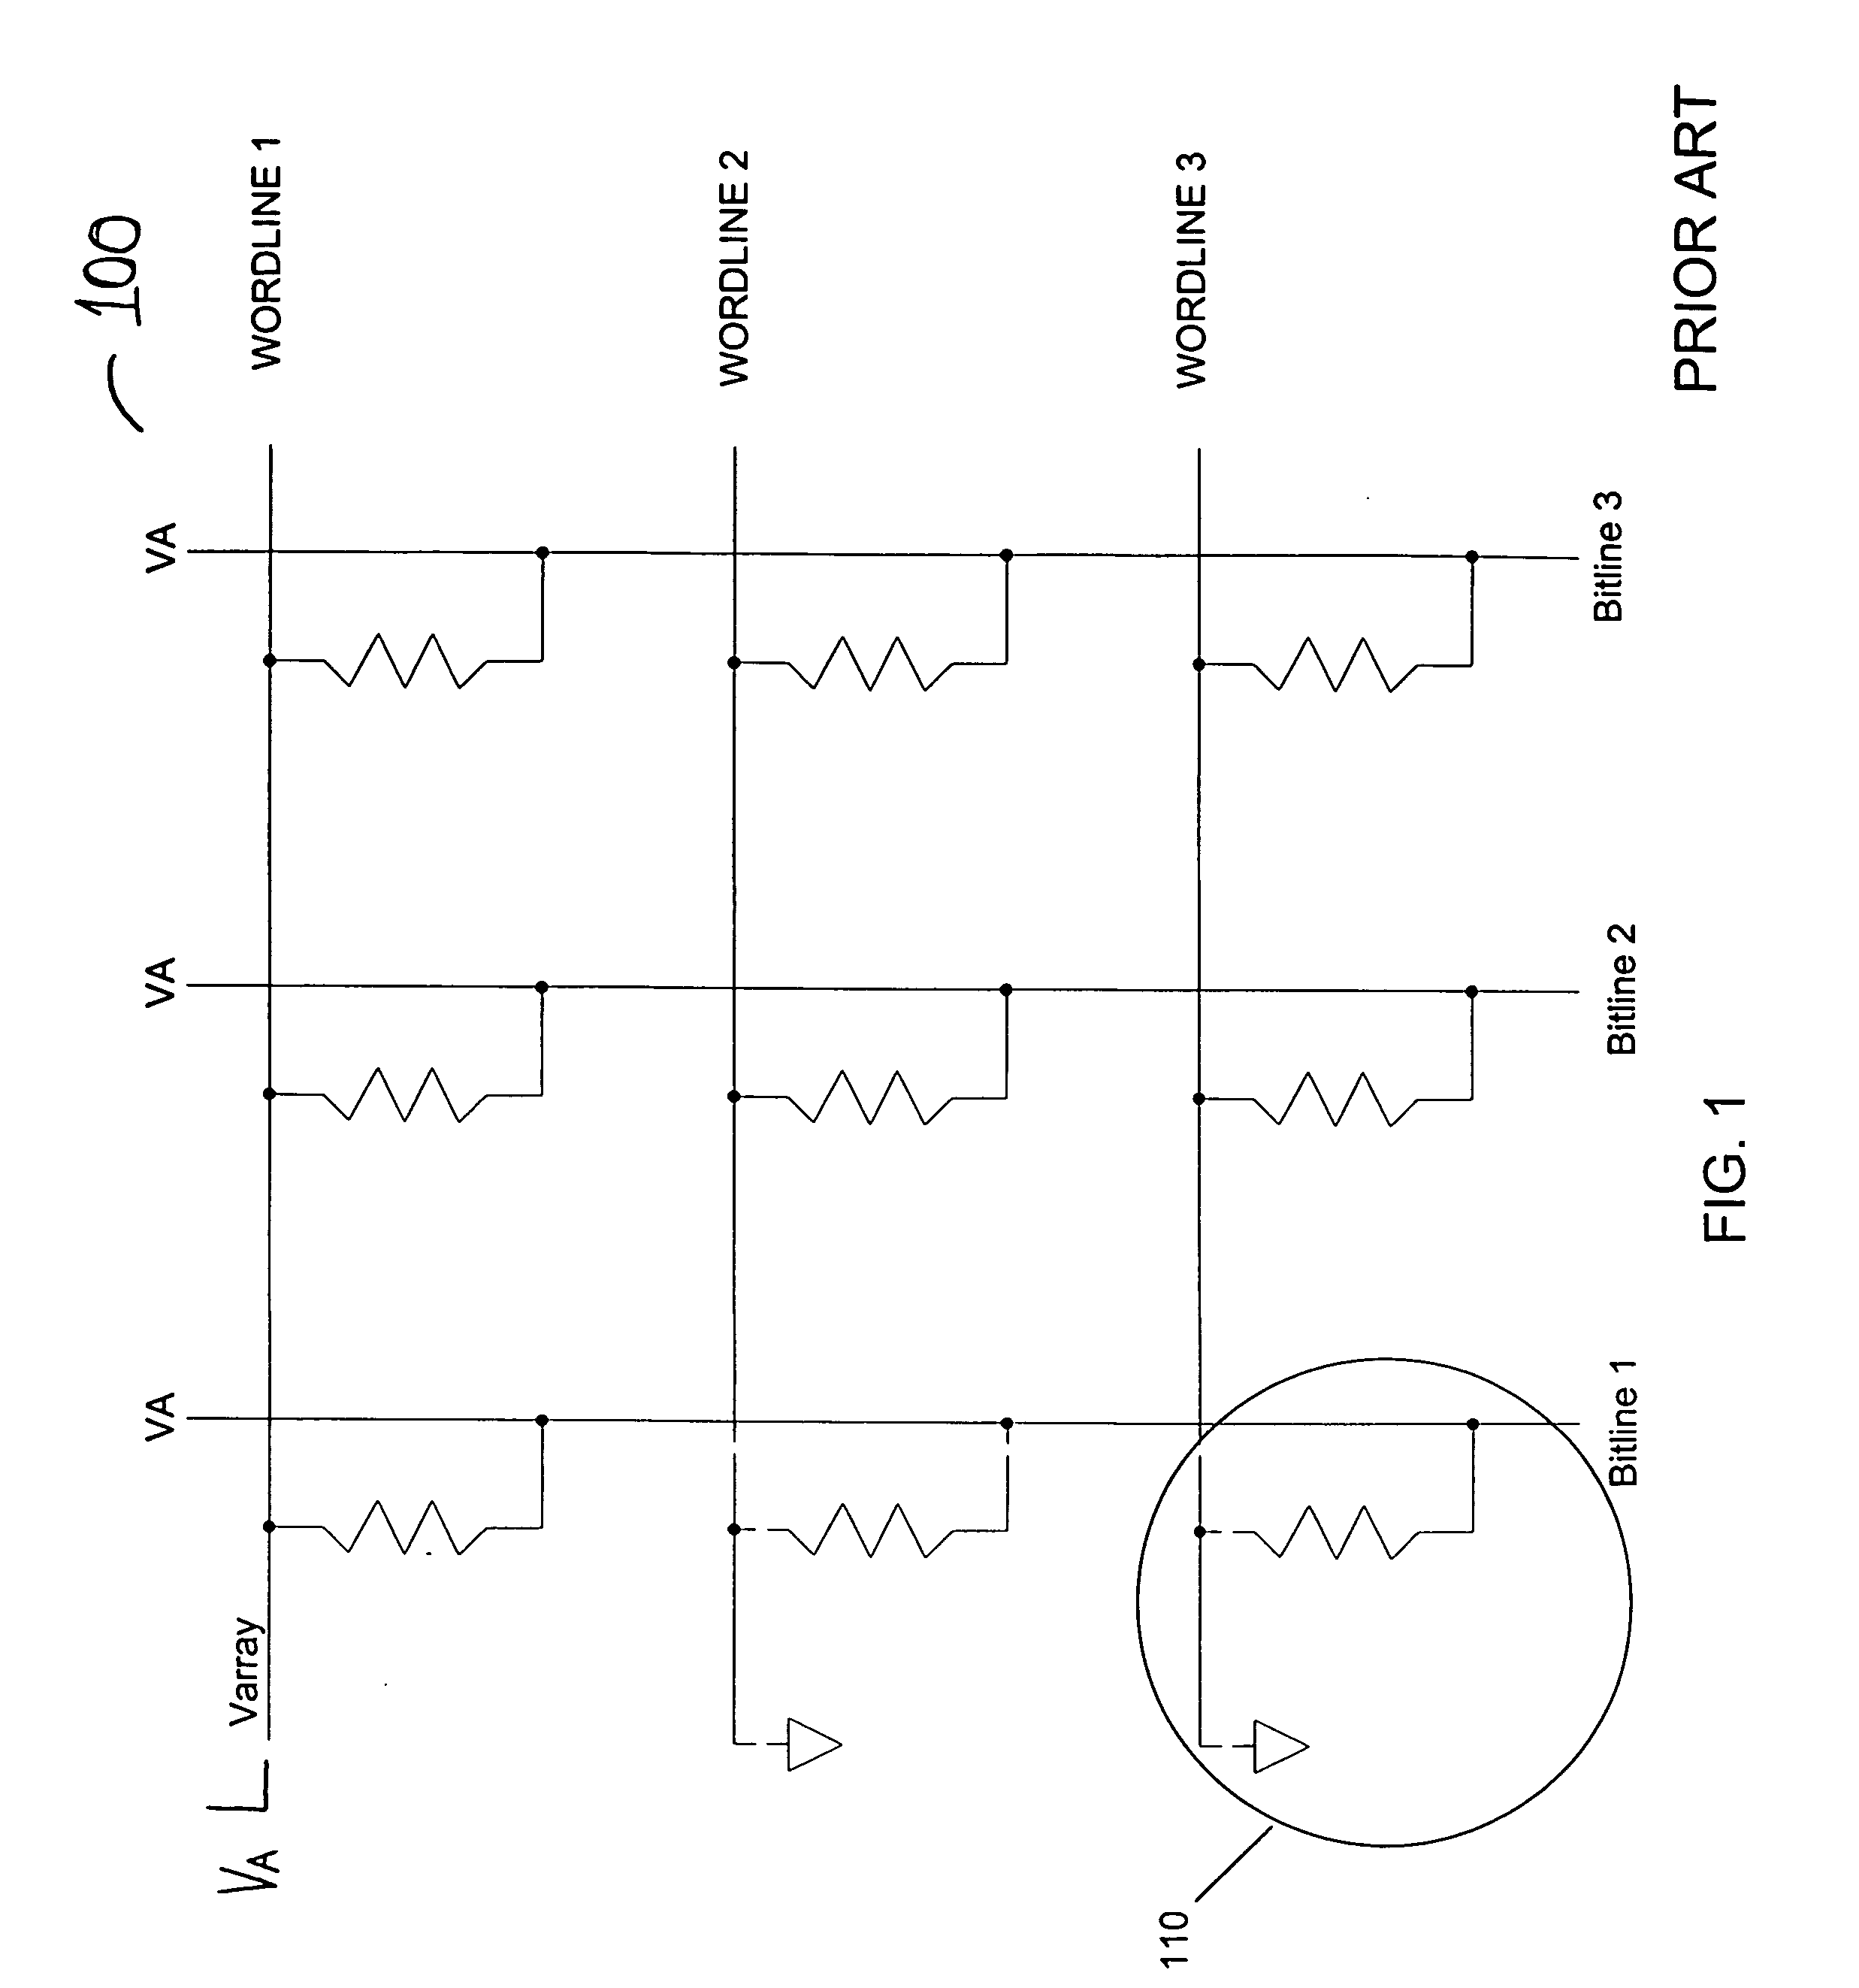 Sensing scheme for programmable resistance memory using voltage coefficient characteristics